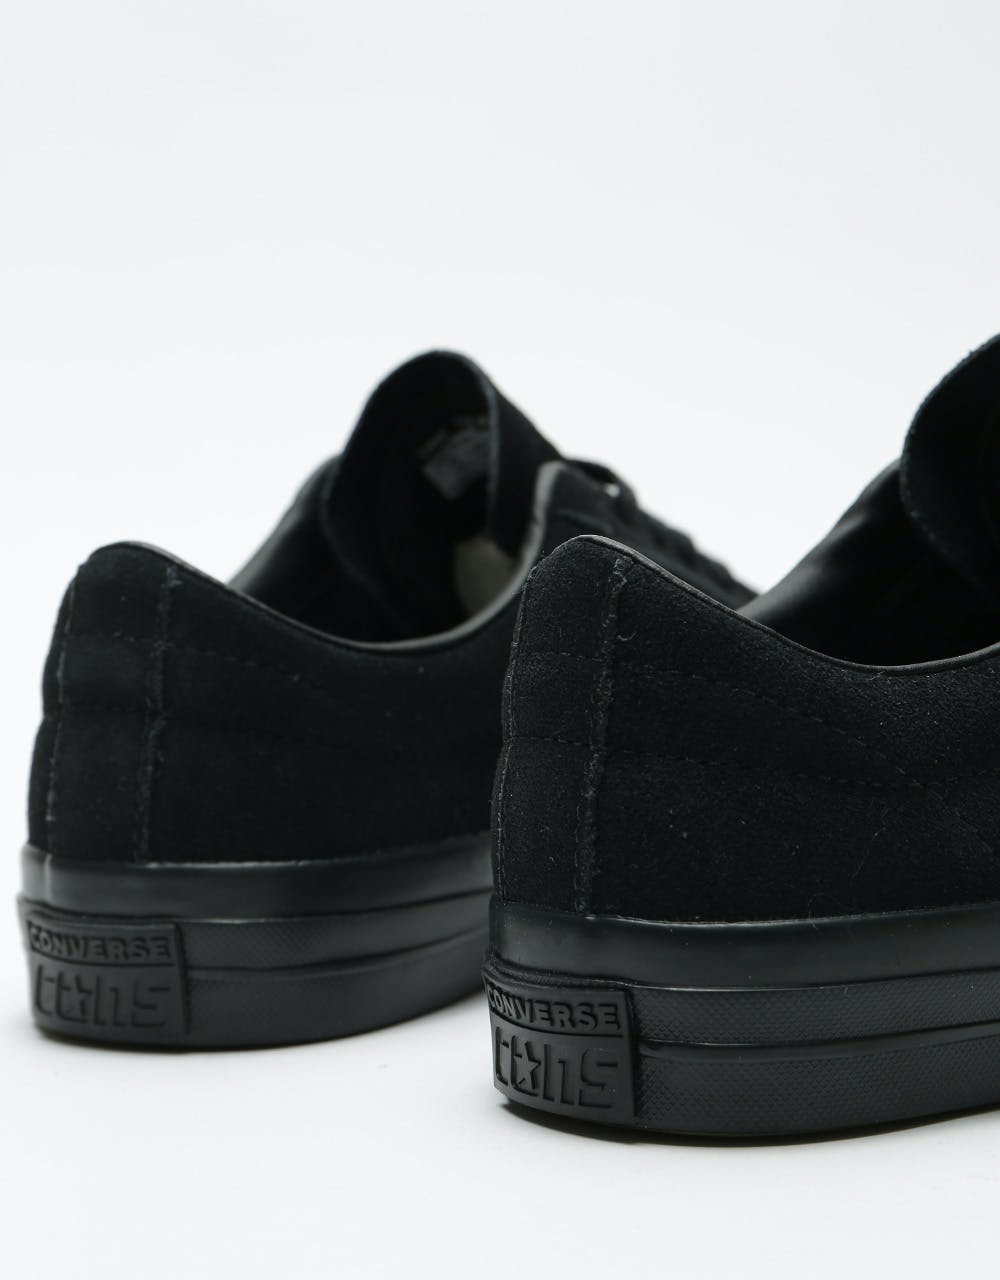 Converse One Star Pro Ox Suede Skate Shoes - Black/Black/Black